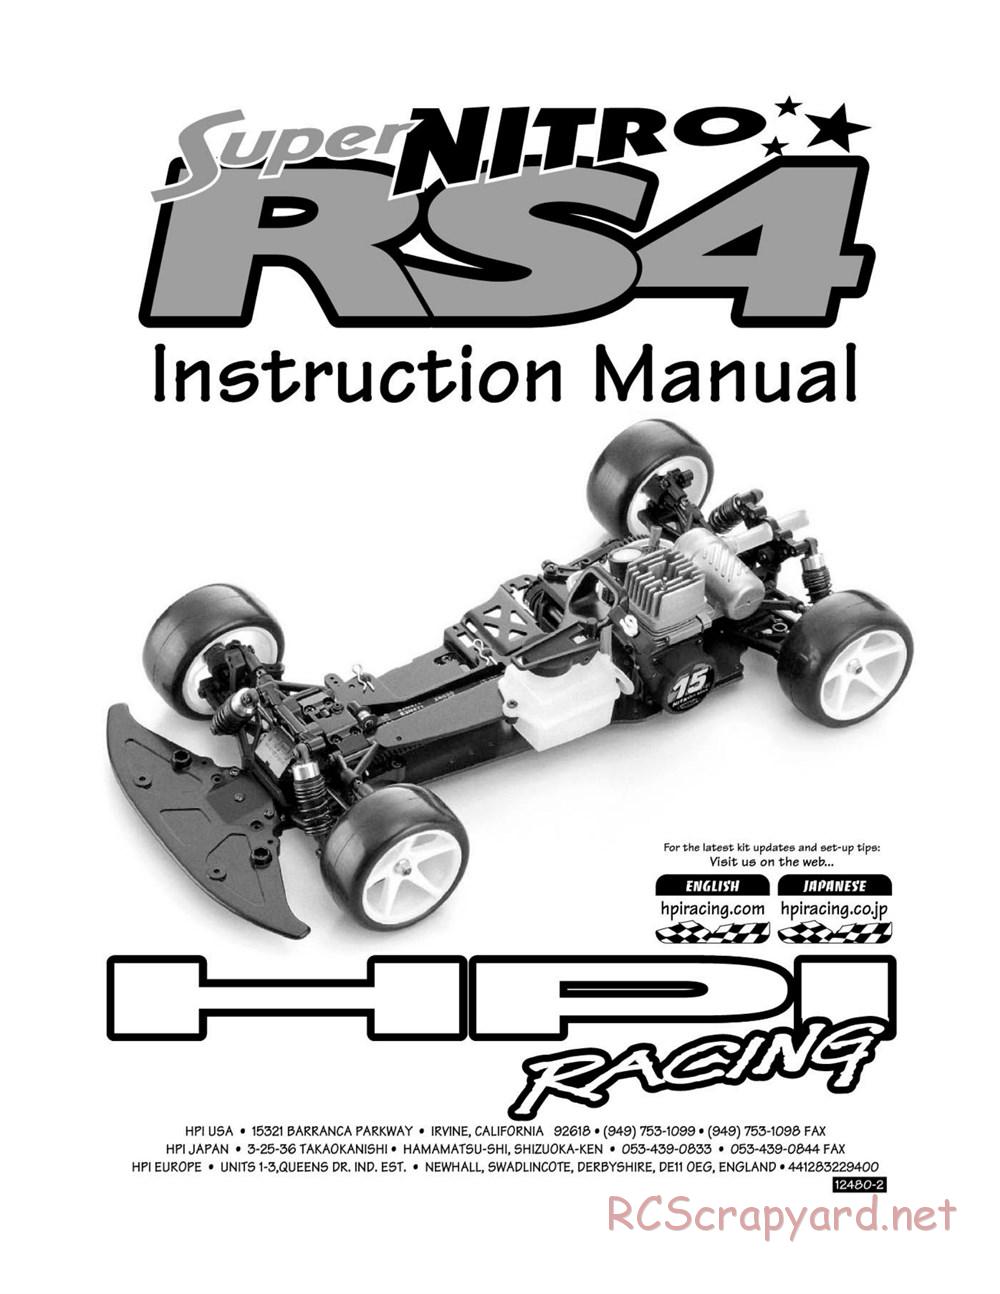 HPI - Super Nitro RS4 - Manual - Page 1